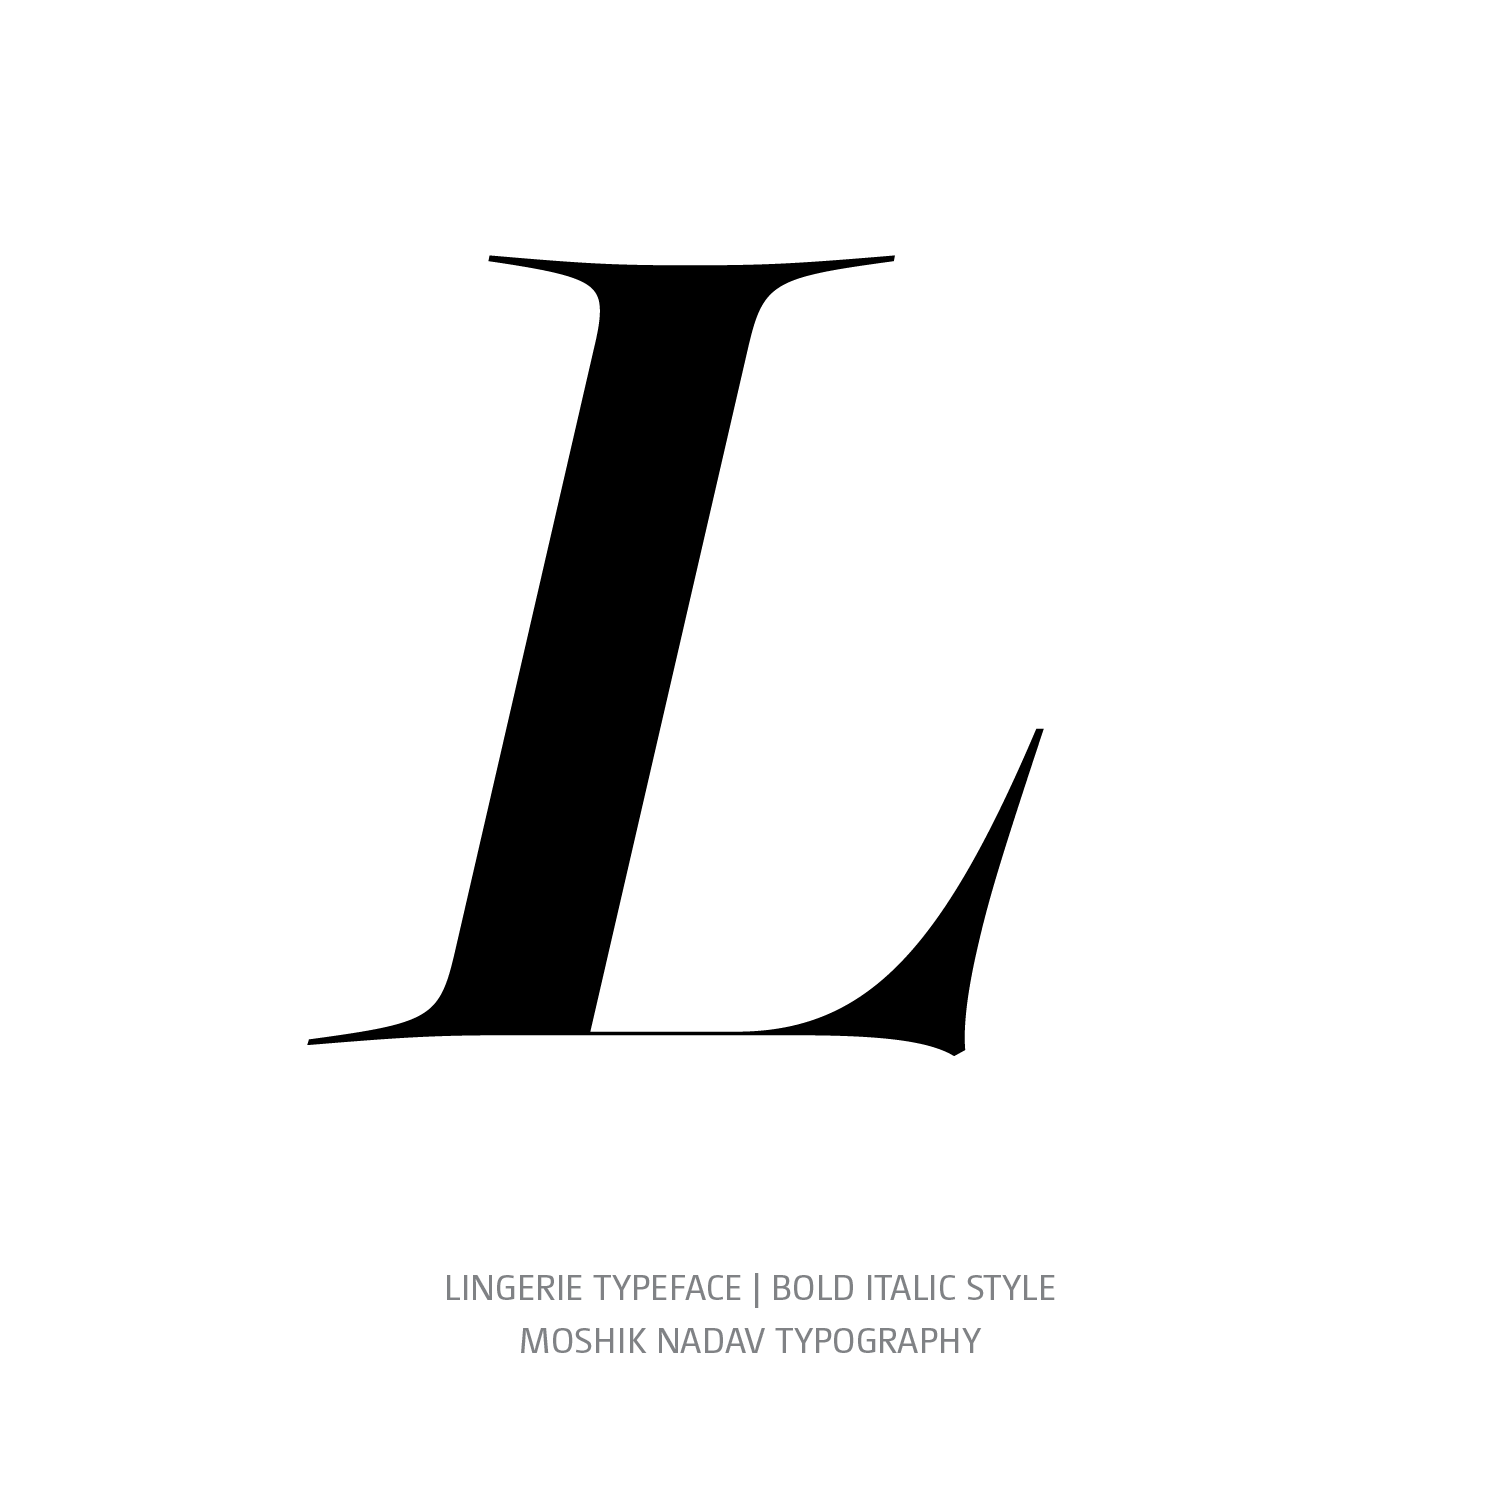 Lingerie Typeface Bold Italic L